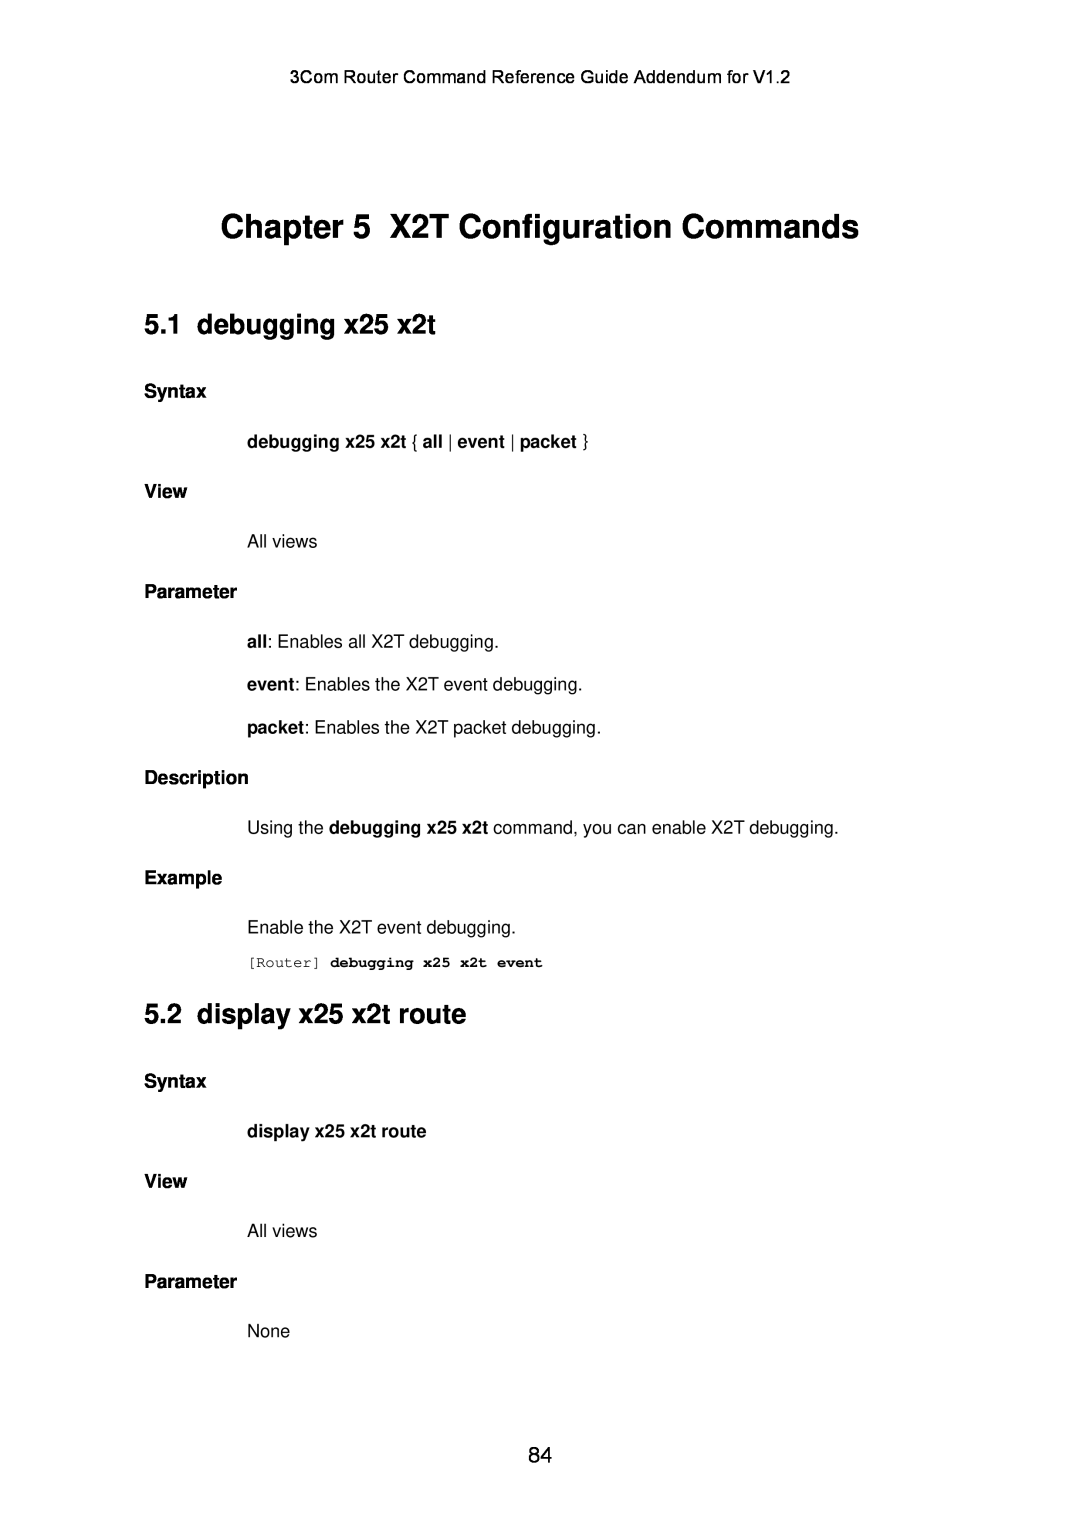 3Com 10014302 X2T Configuration Commands, debugging x25 x2t, display x25 x2t route, Syntax, View, Parameter, Description 